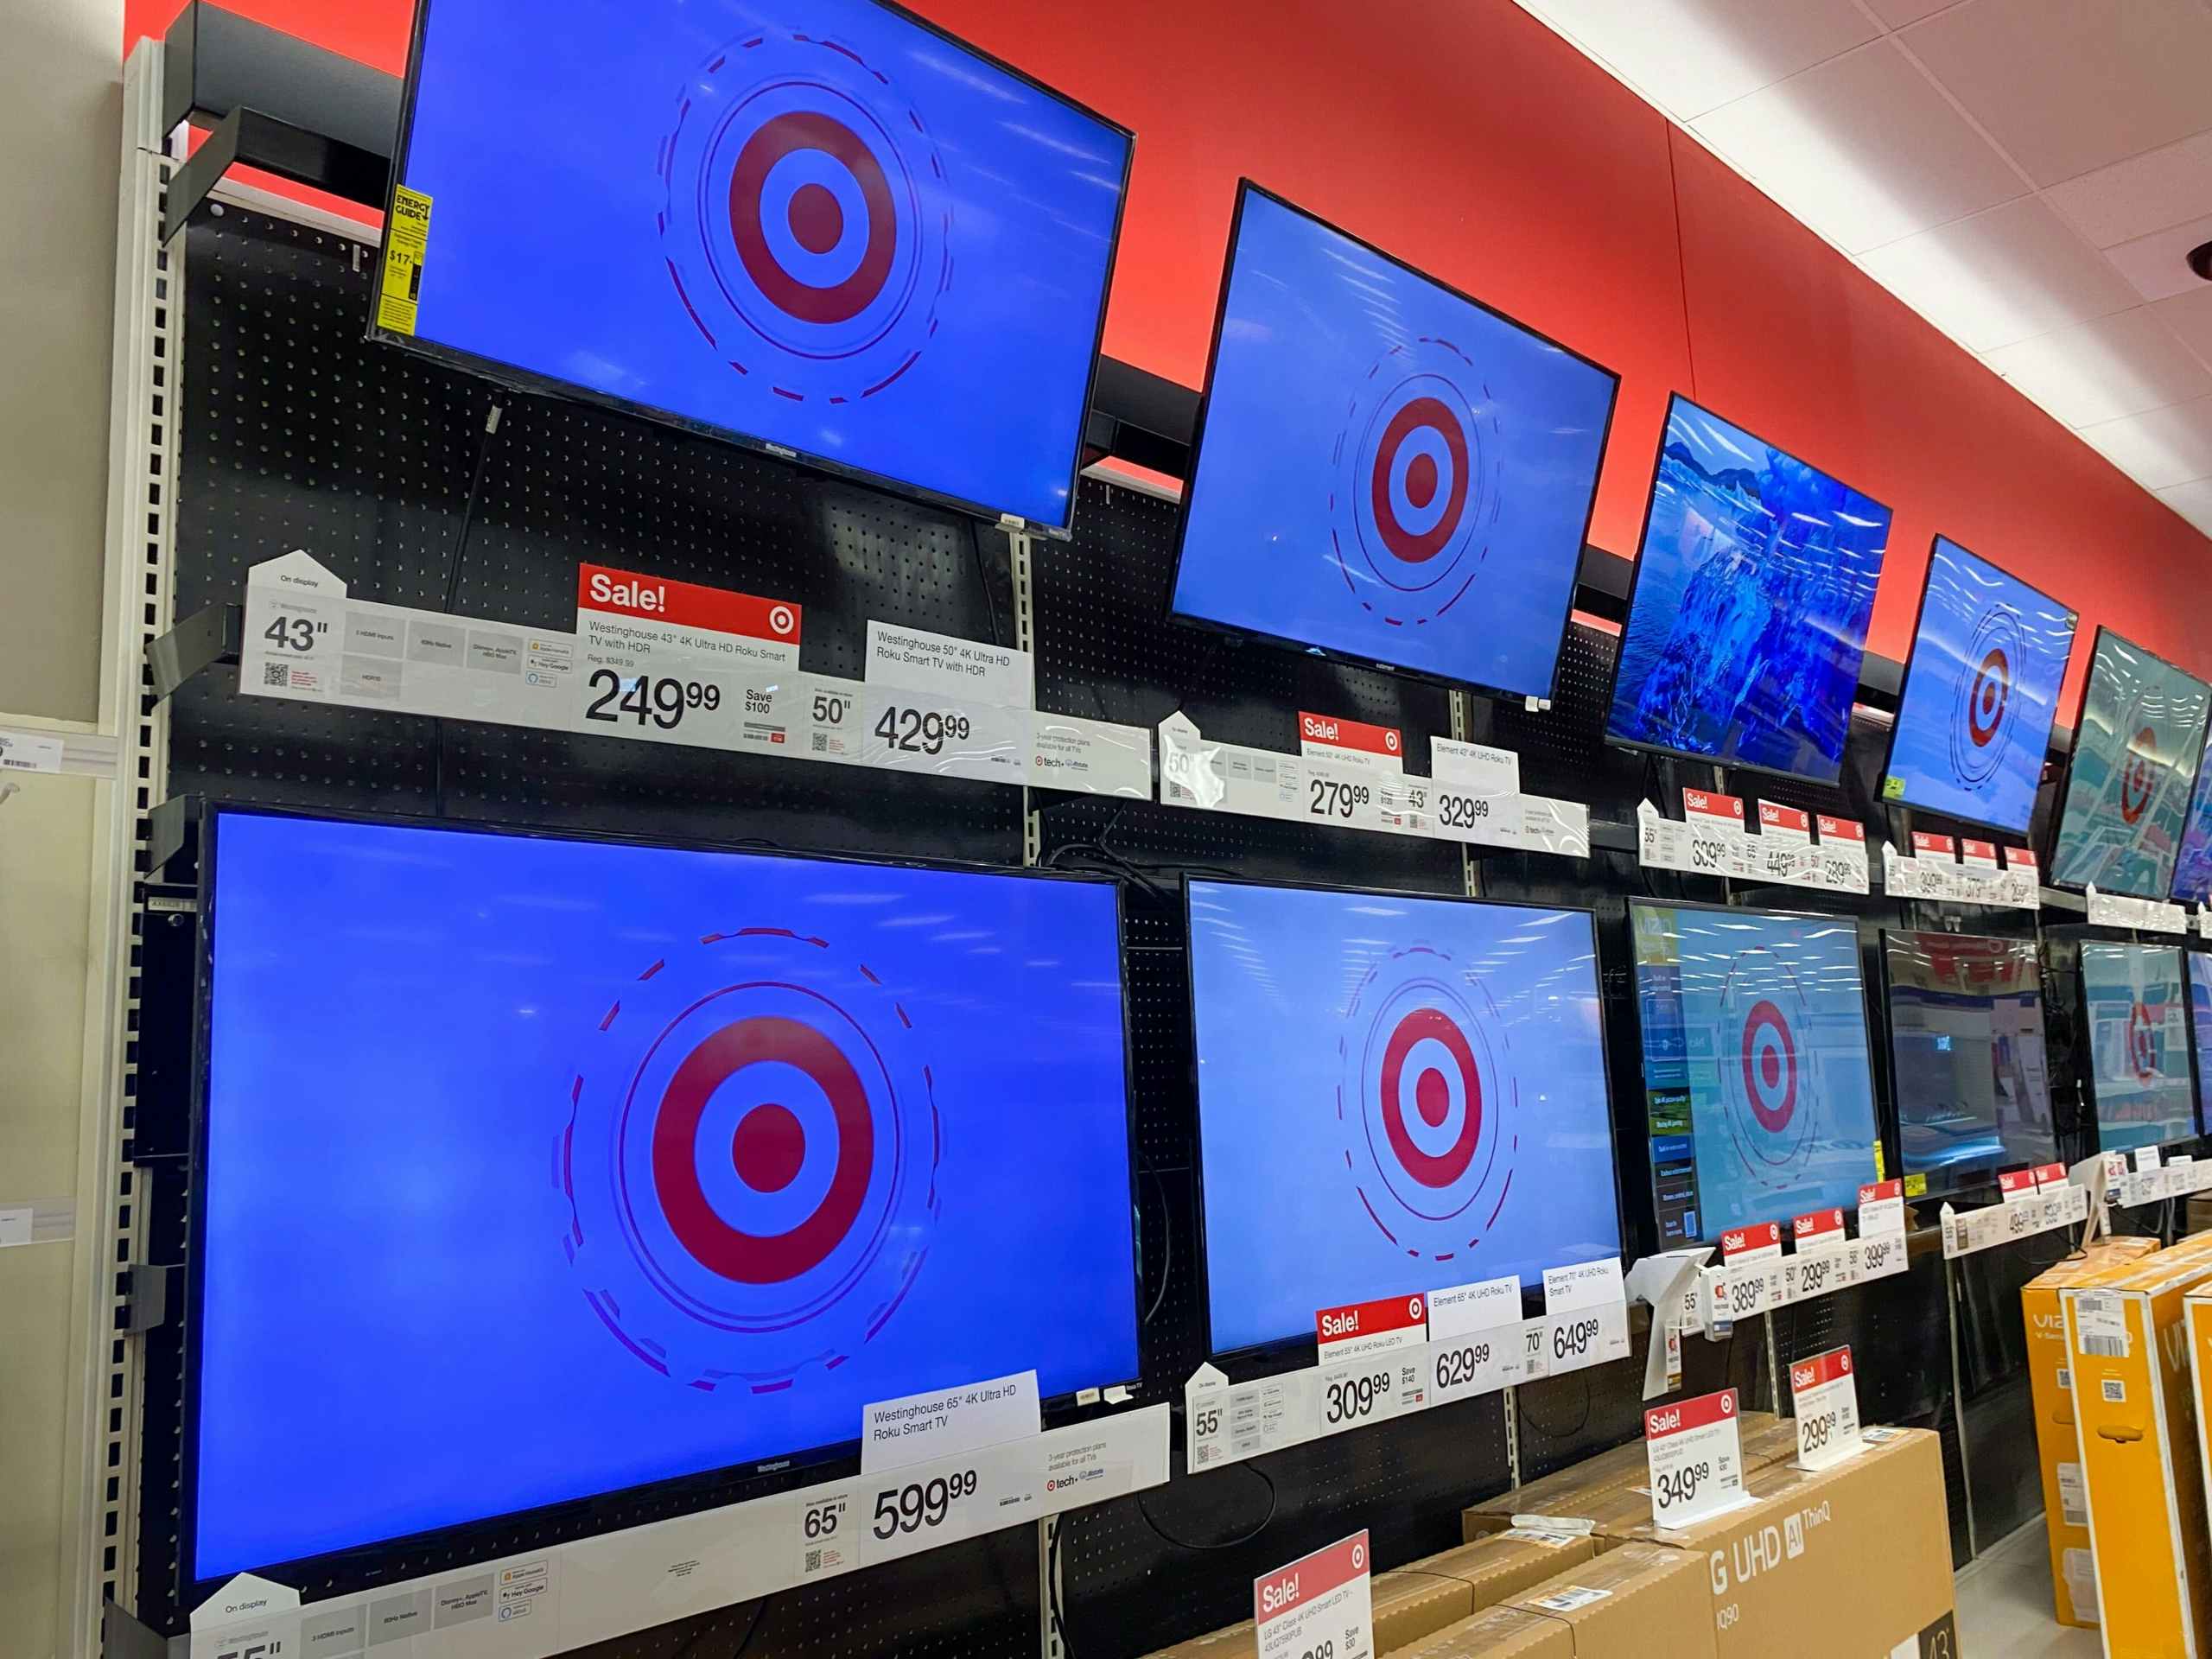 tvs on display sale at Target